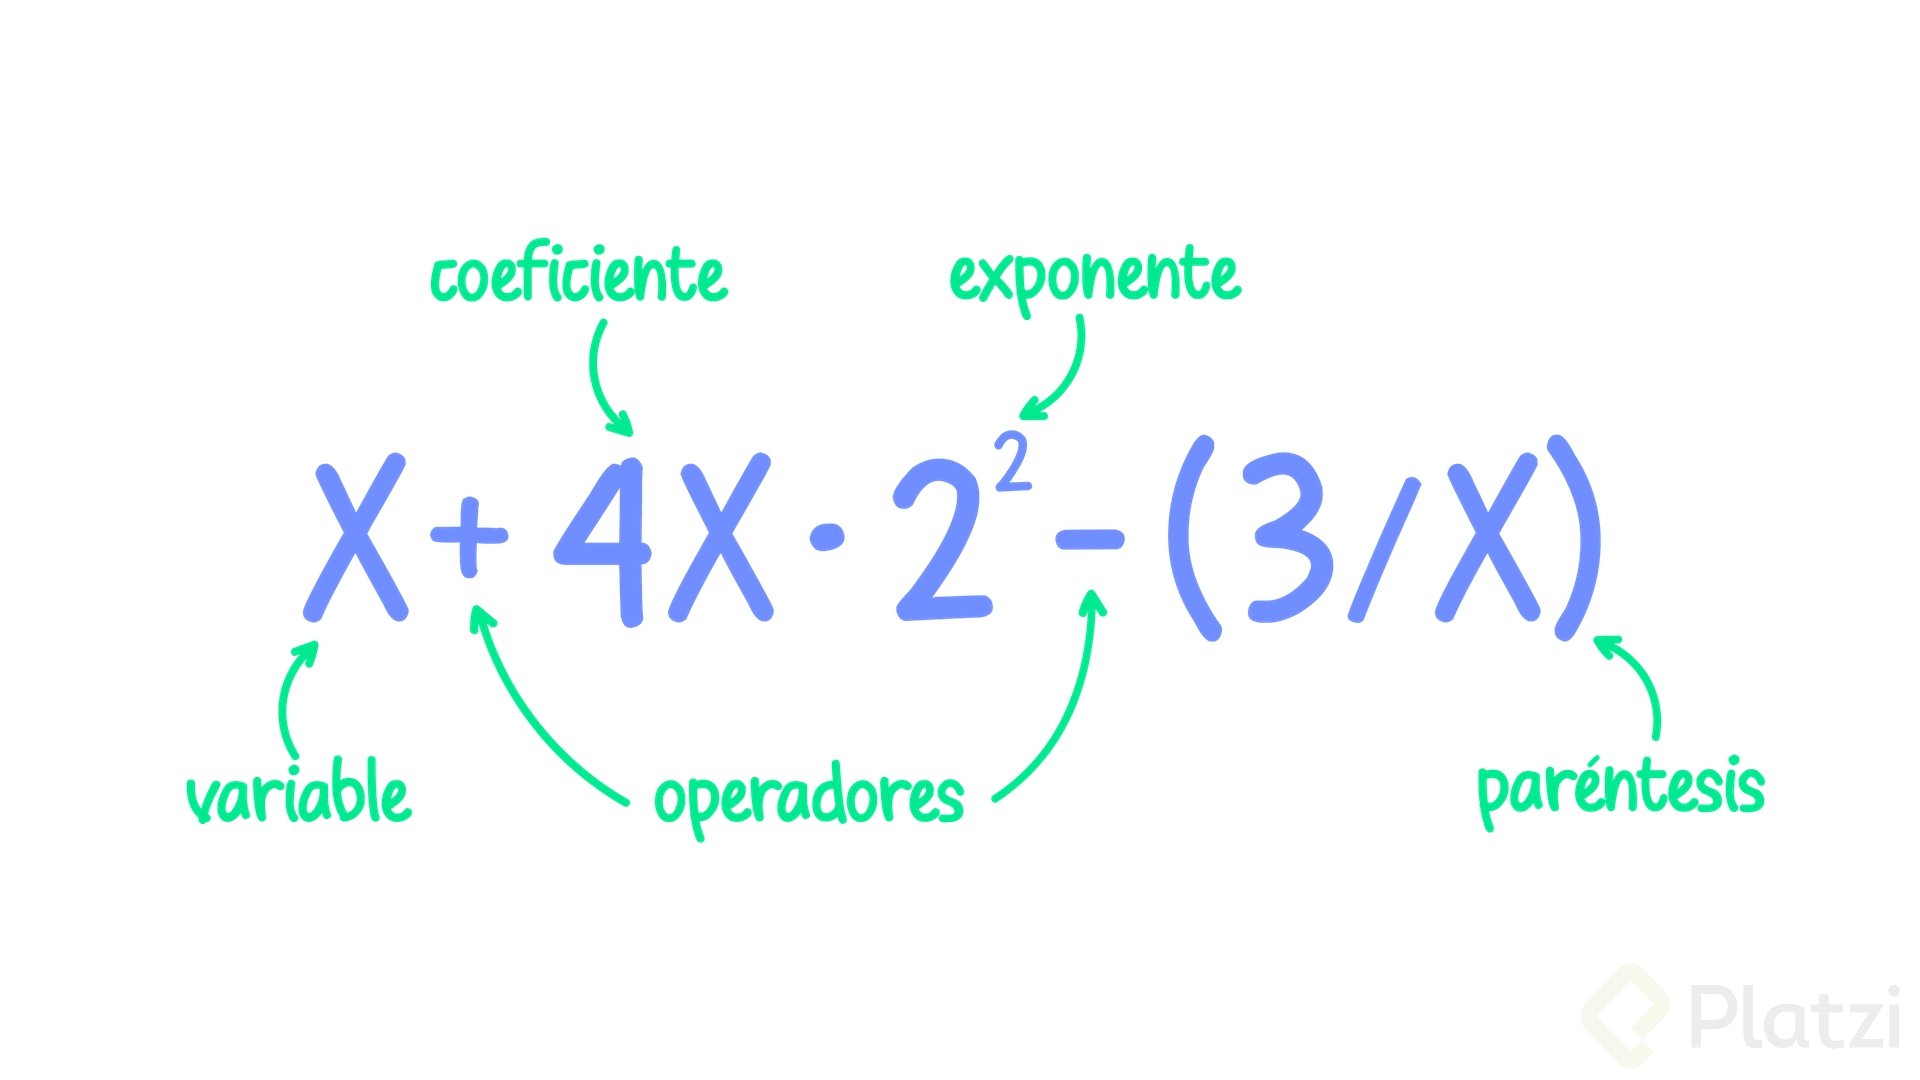 variable-coeficiente-operadores-exponente-parentesis.png